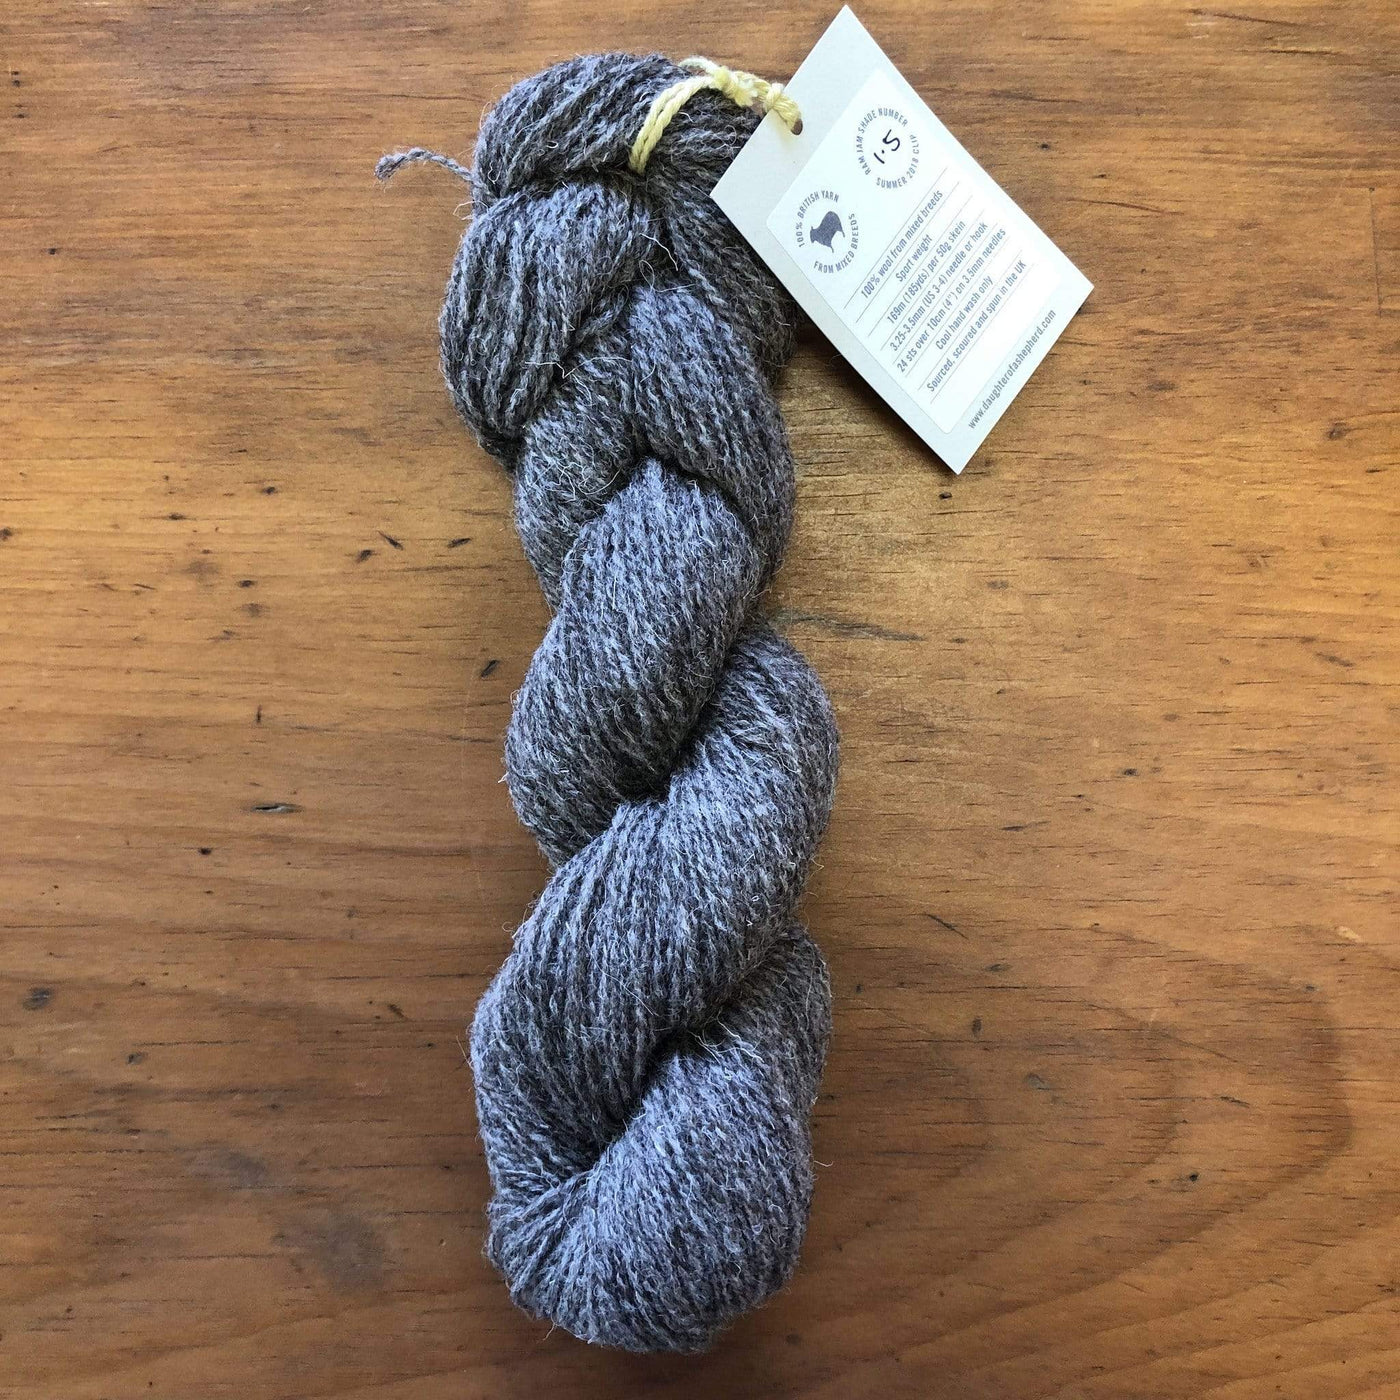 The Woolly Thistle Ram Jam Sport 2ply yarn from Daughter of a Shepherd in Inbetween Grey